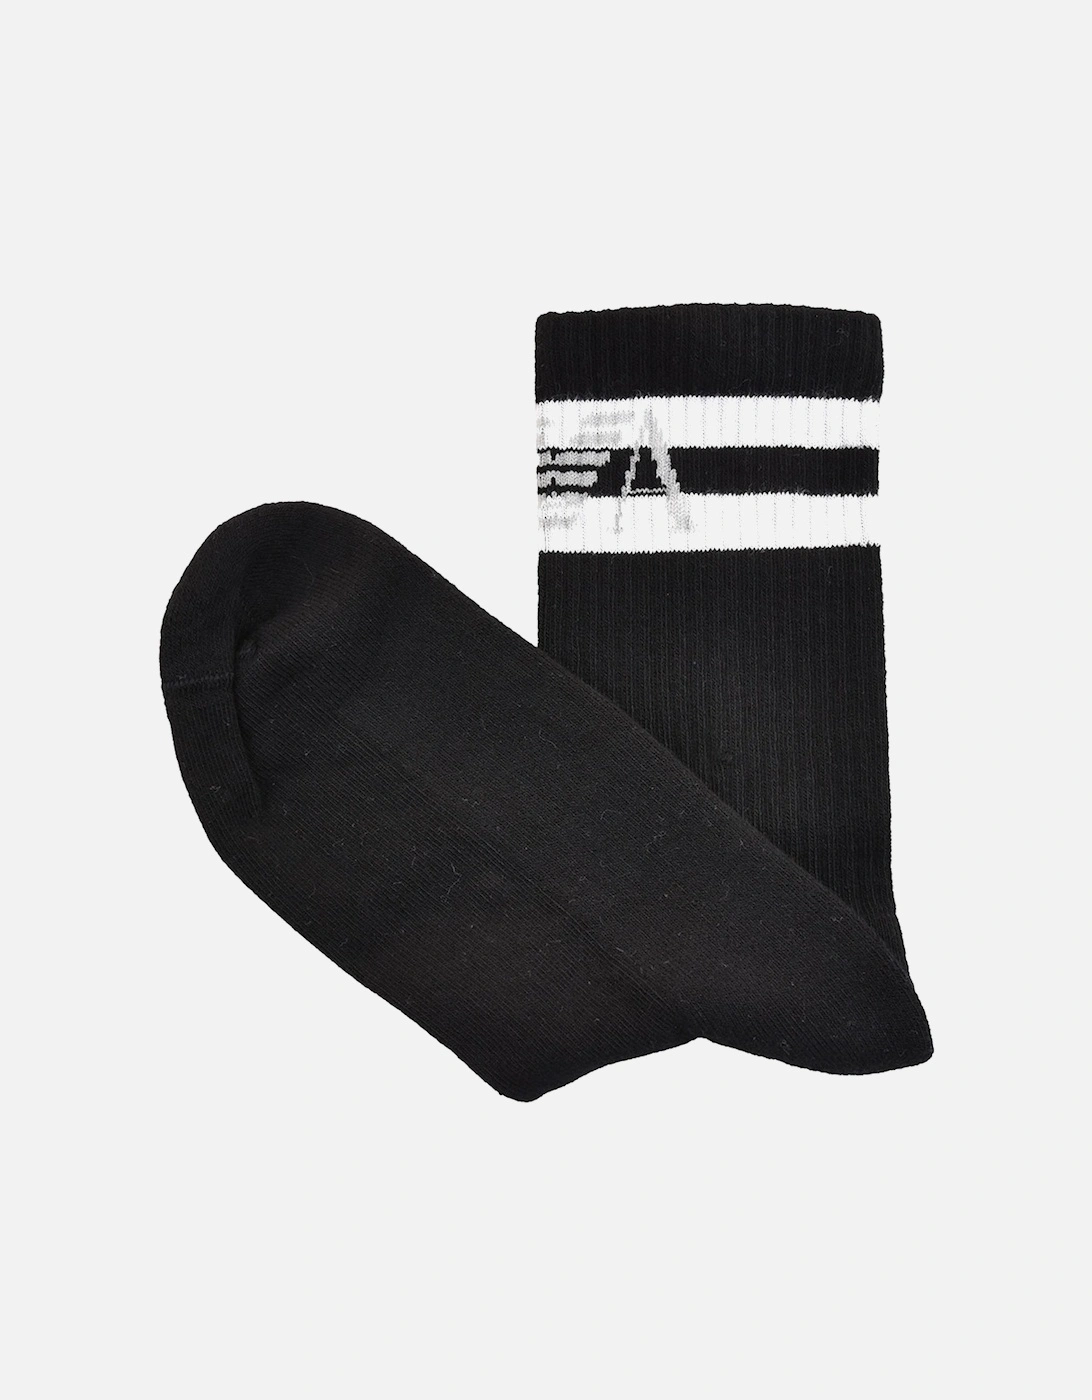 Mens Sports Socks (Black)